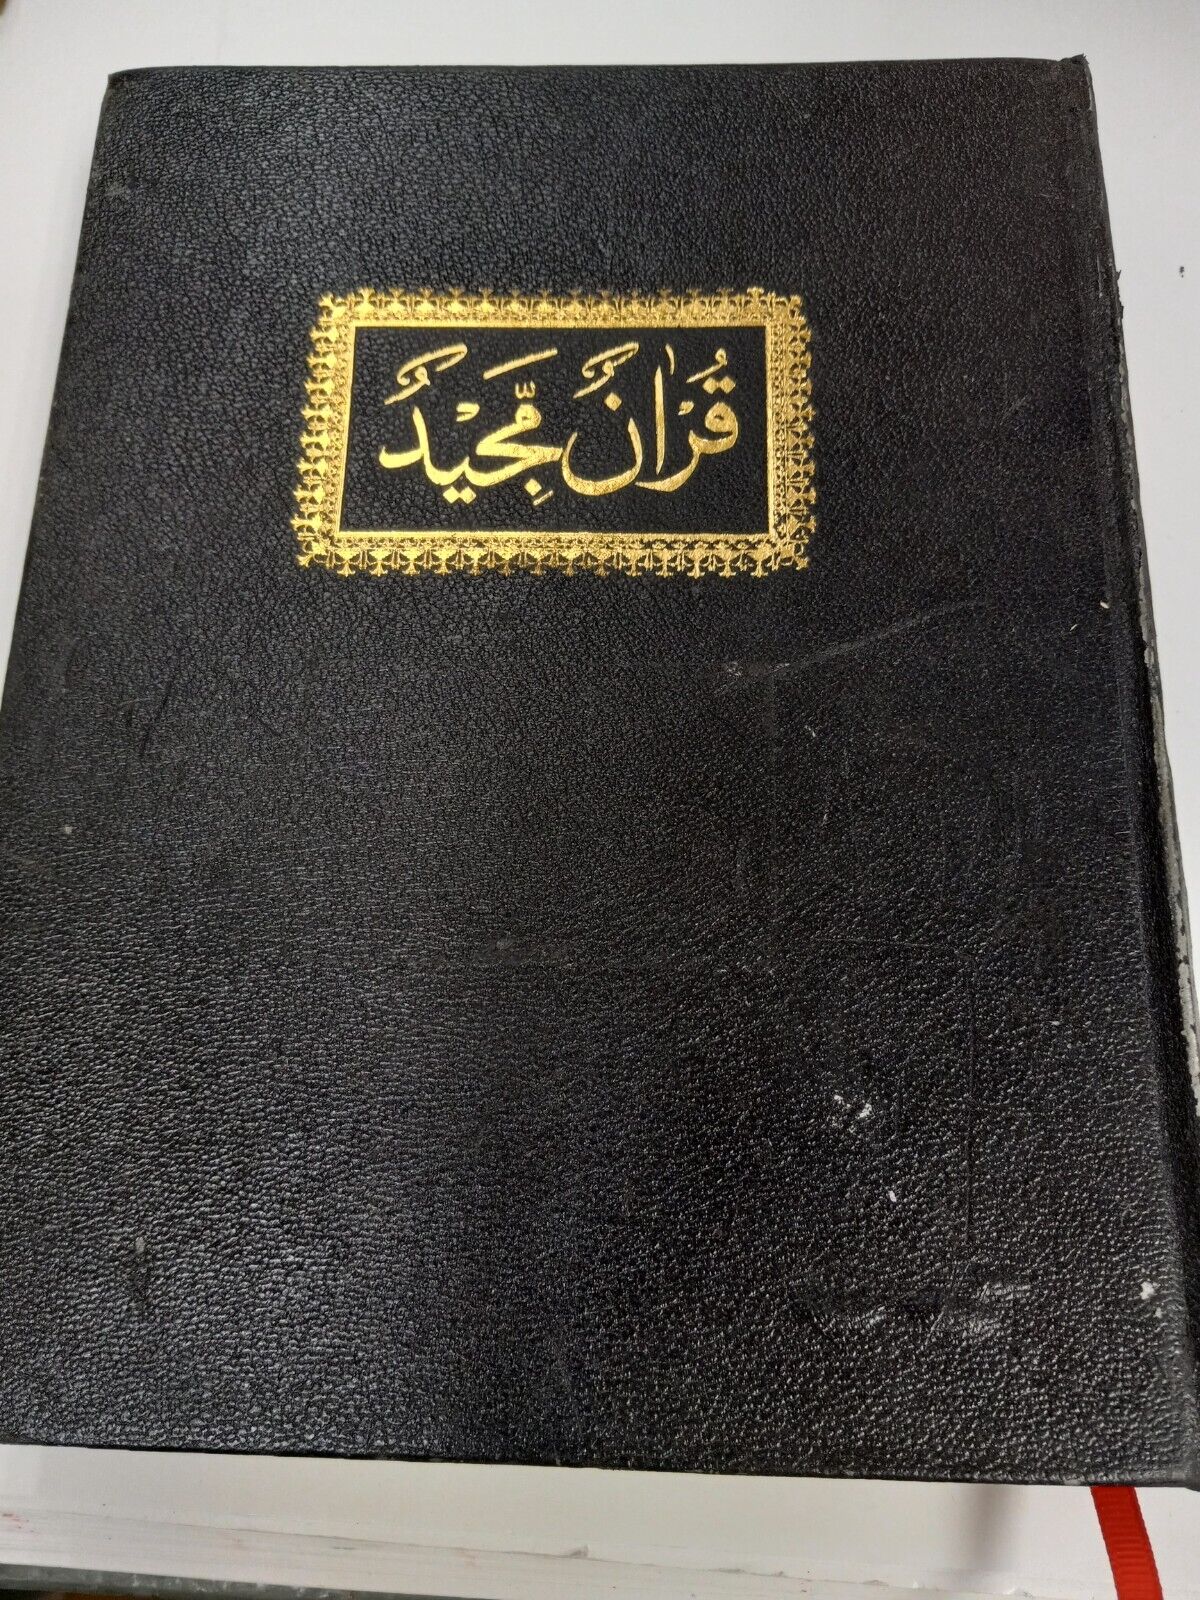 Vintage Antique Quran Arabic Unknown Year or Publisher  ( Handwritten Page #)